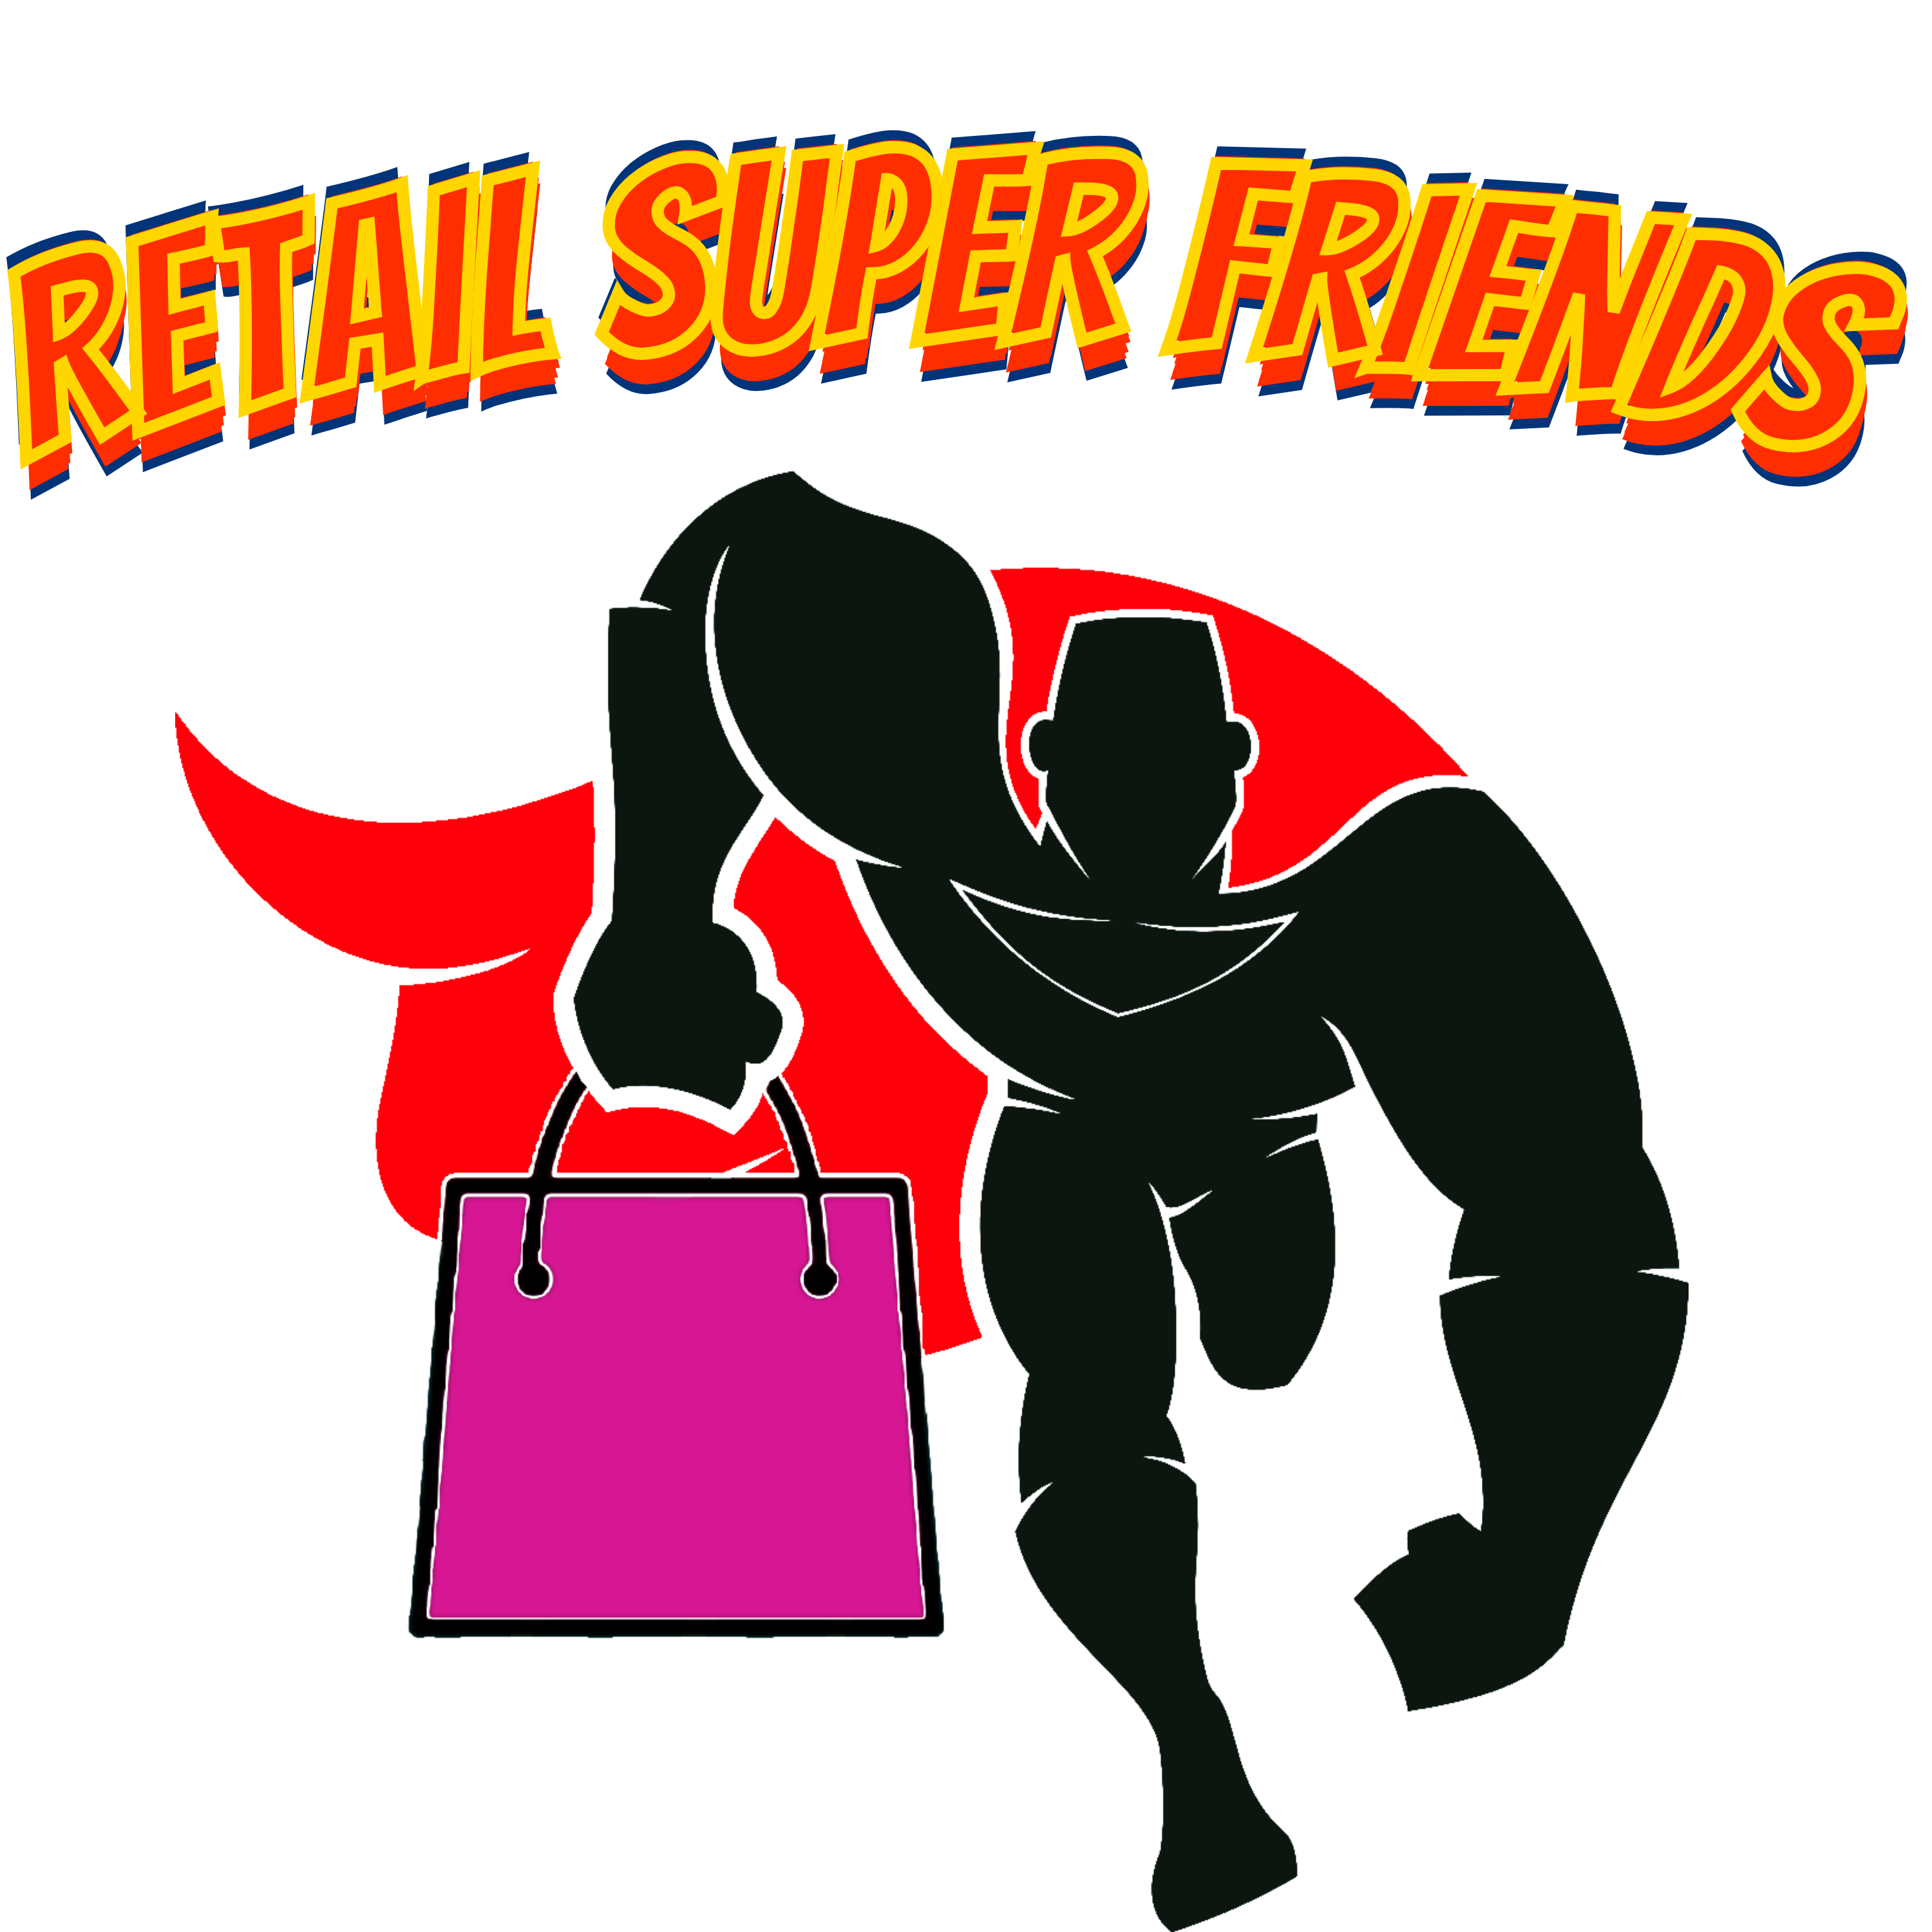 Retail Super Friends